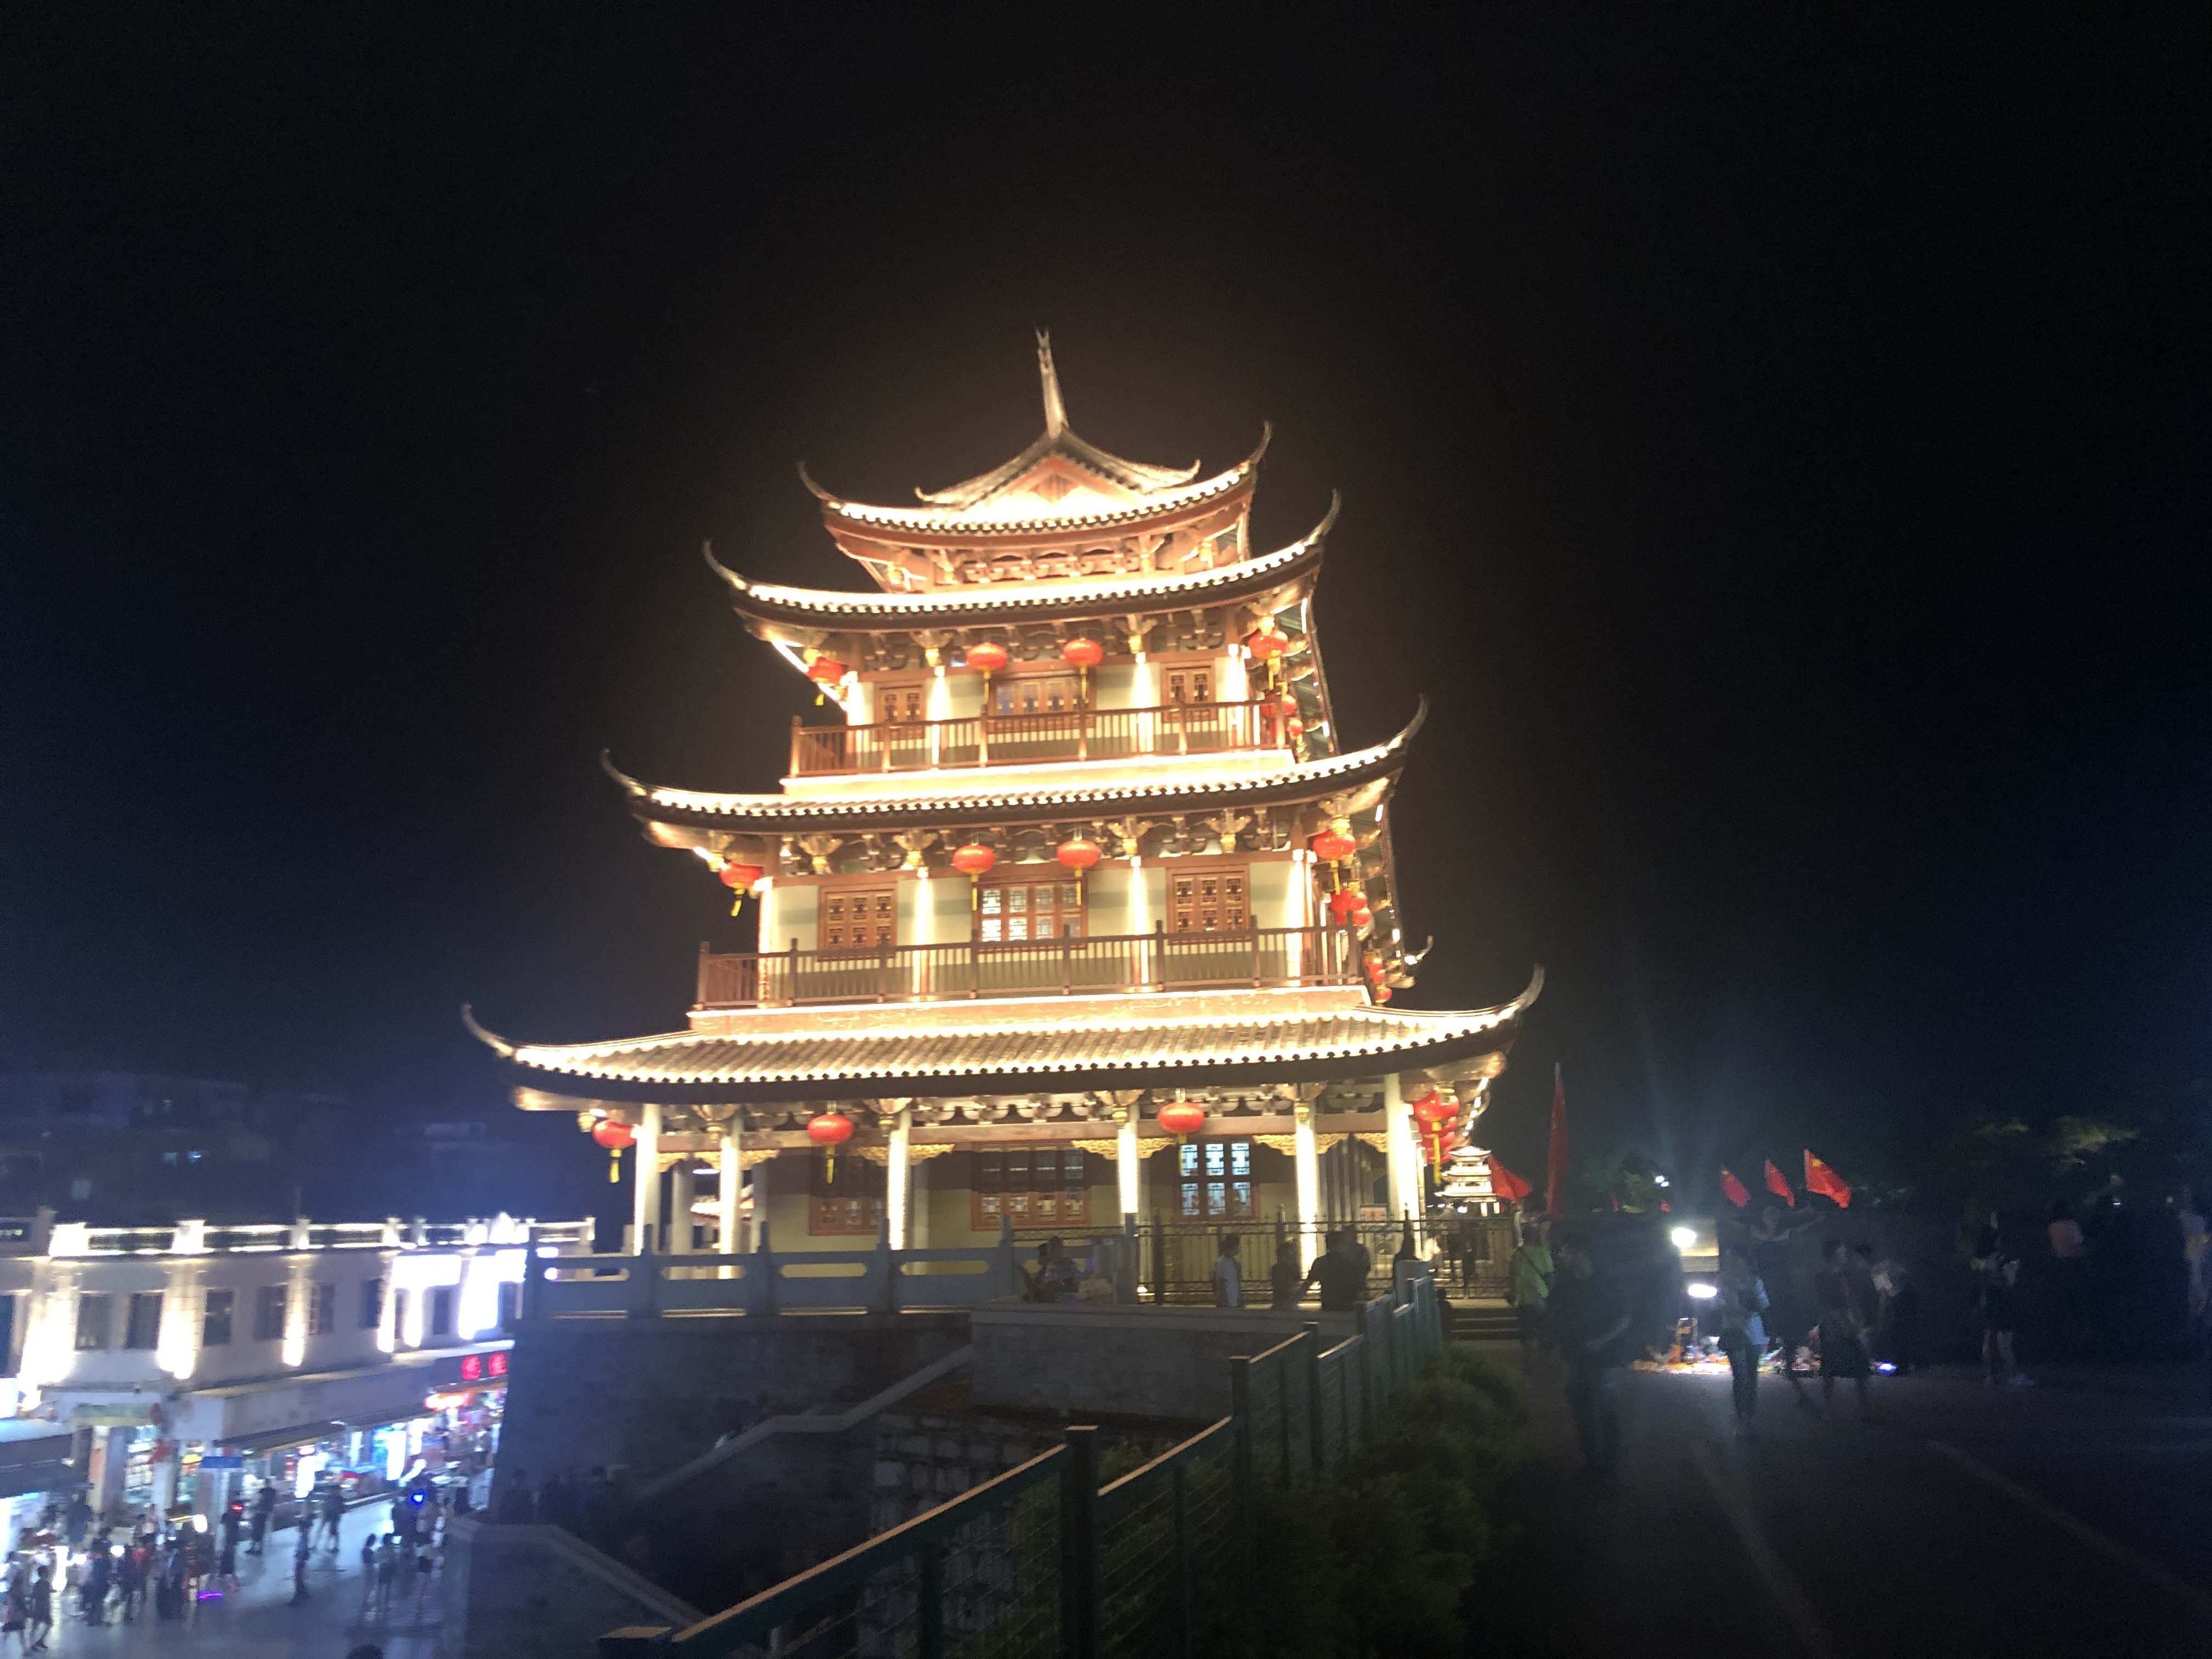 Guangjimen Tower